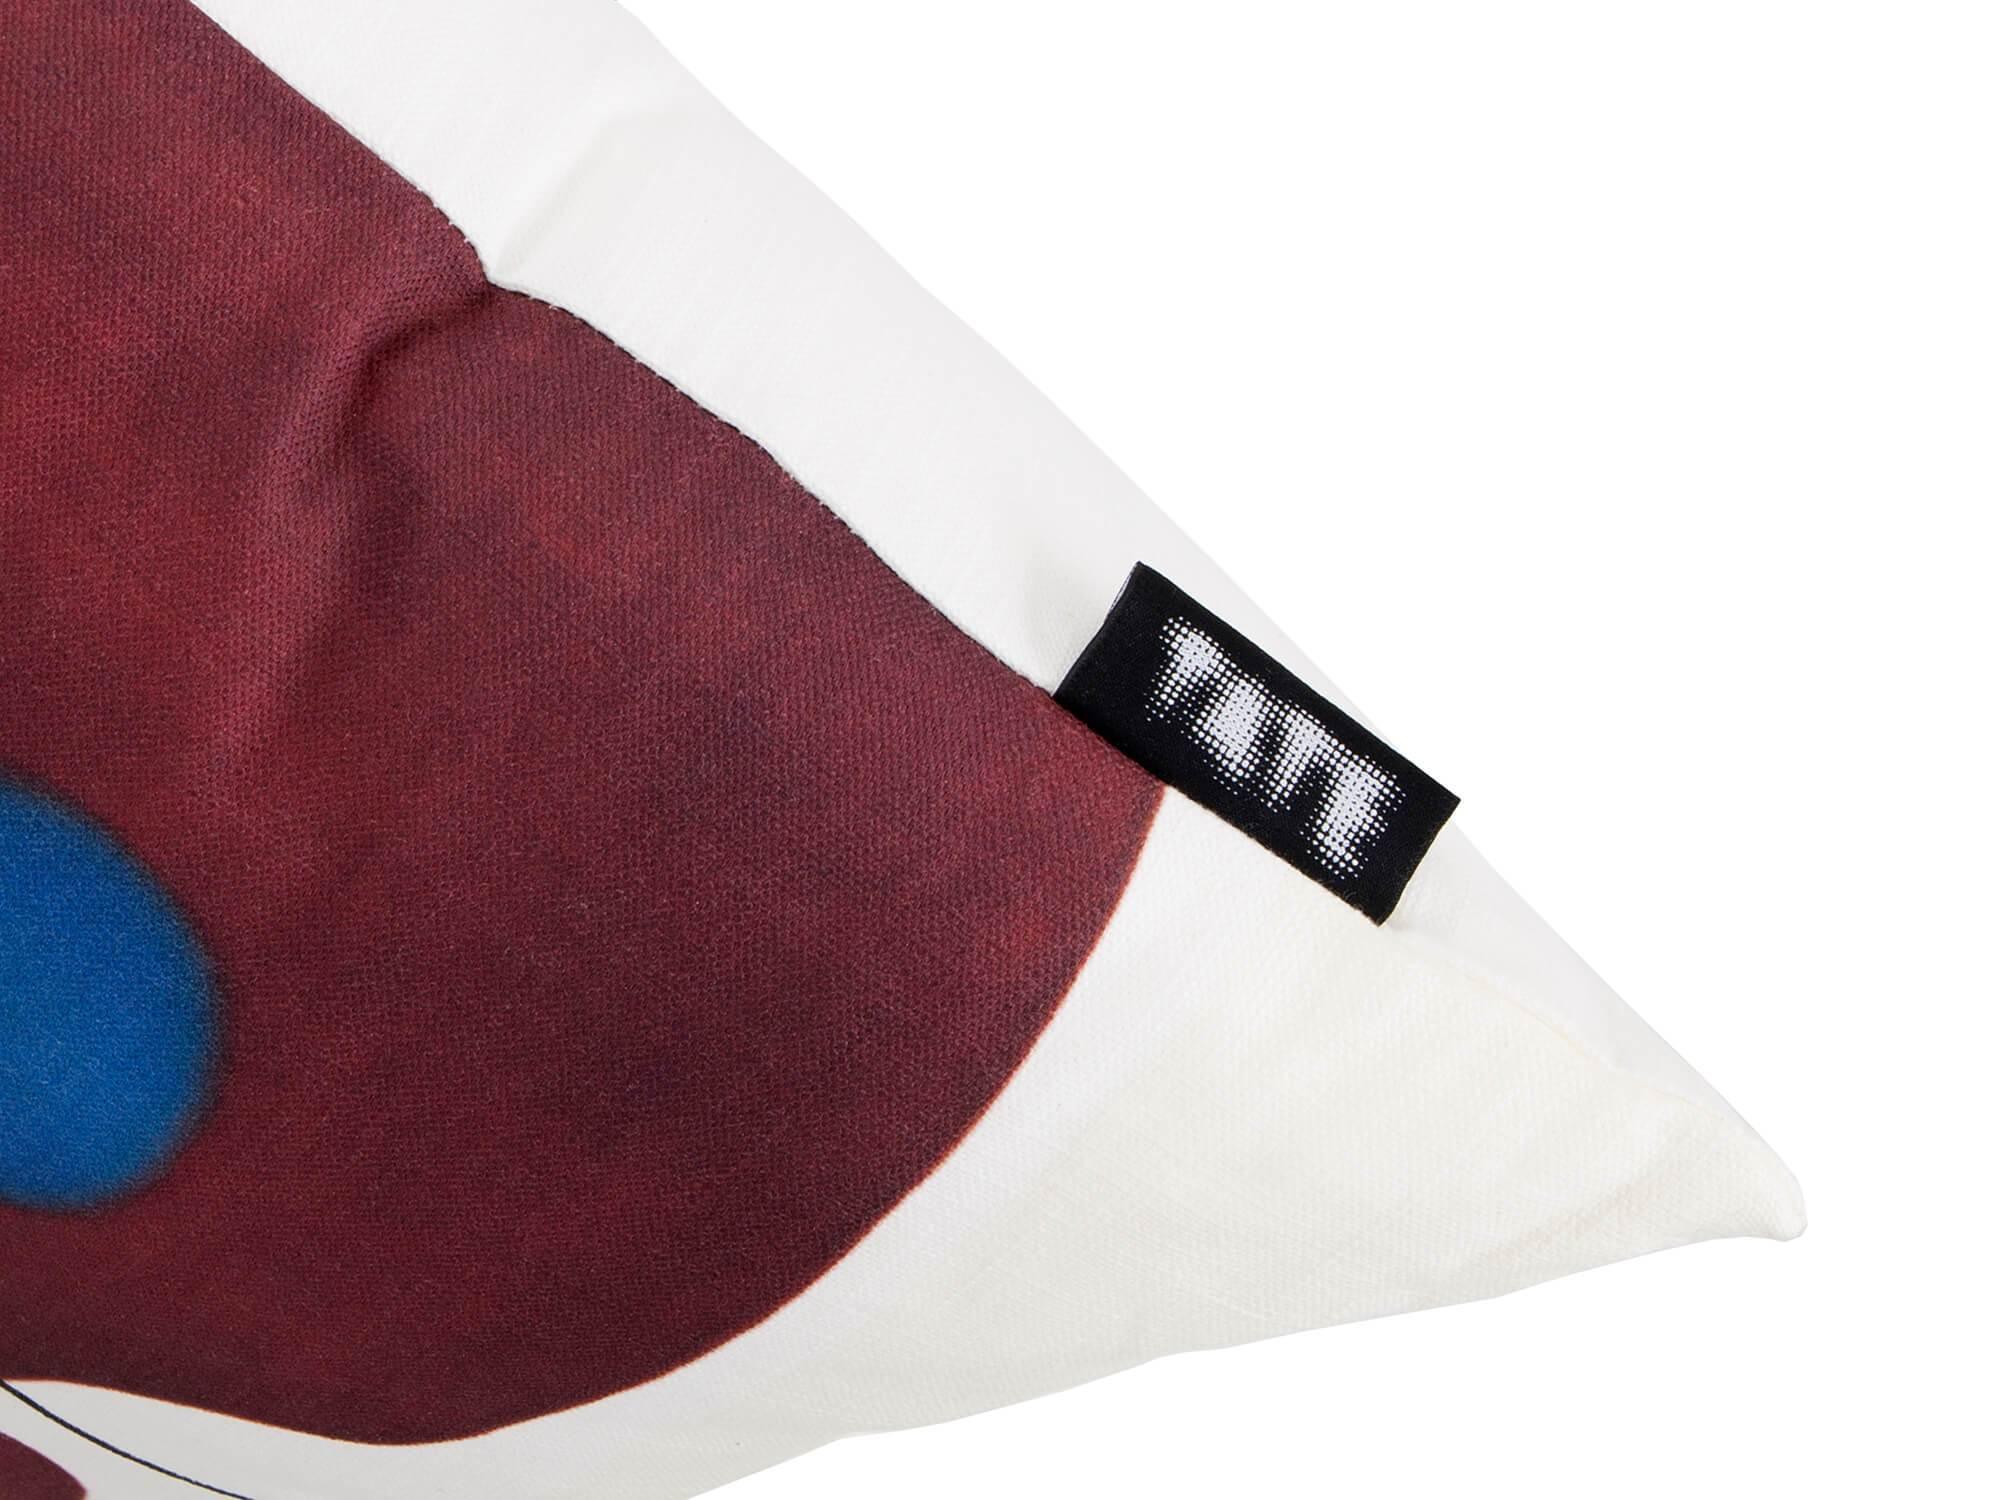 Nina Vatolina's Fascism - Tate - The Russian Revolution Cushion - Handmade Cushions UK - WeLoveCushions